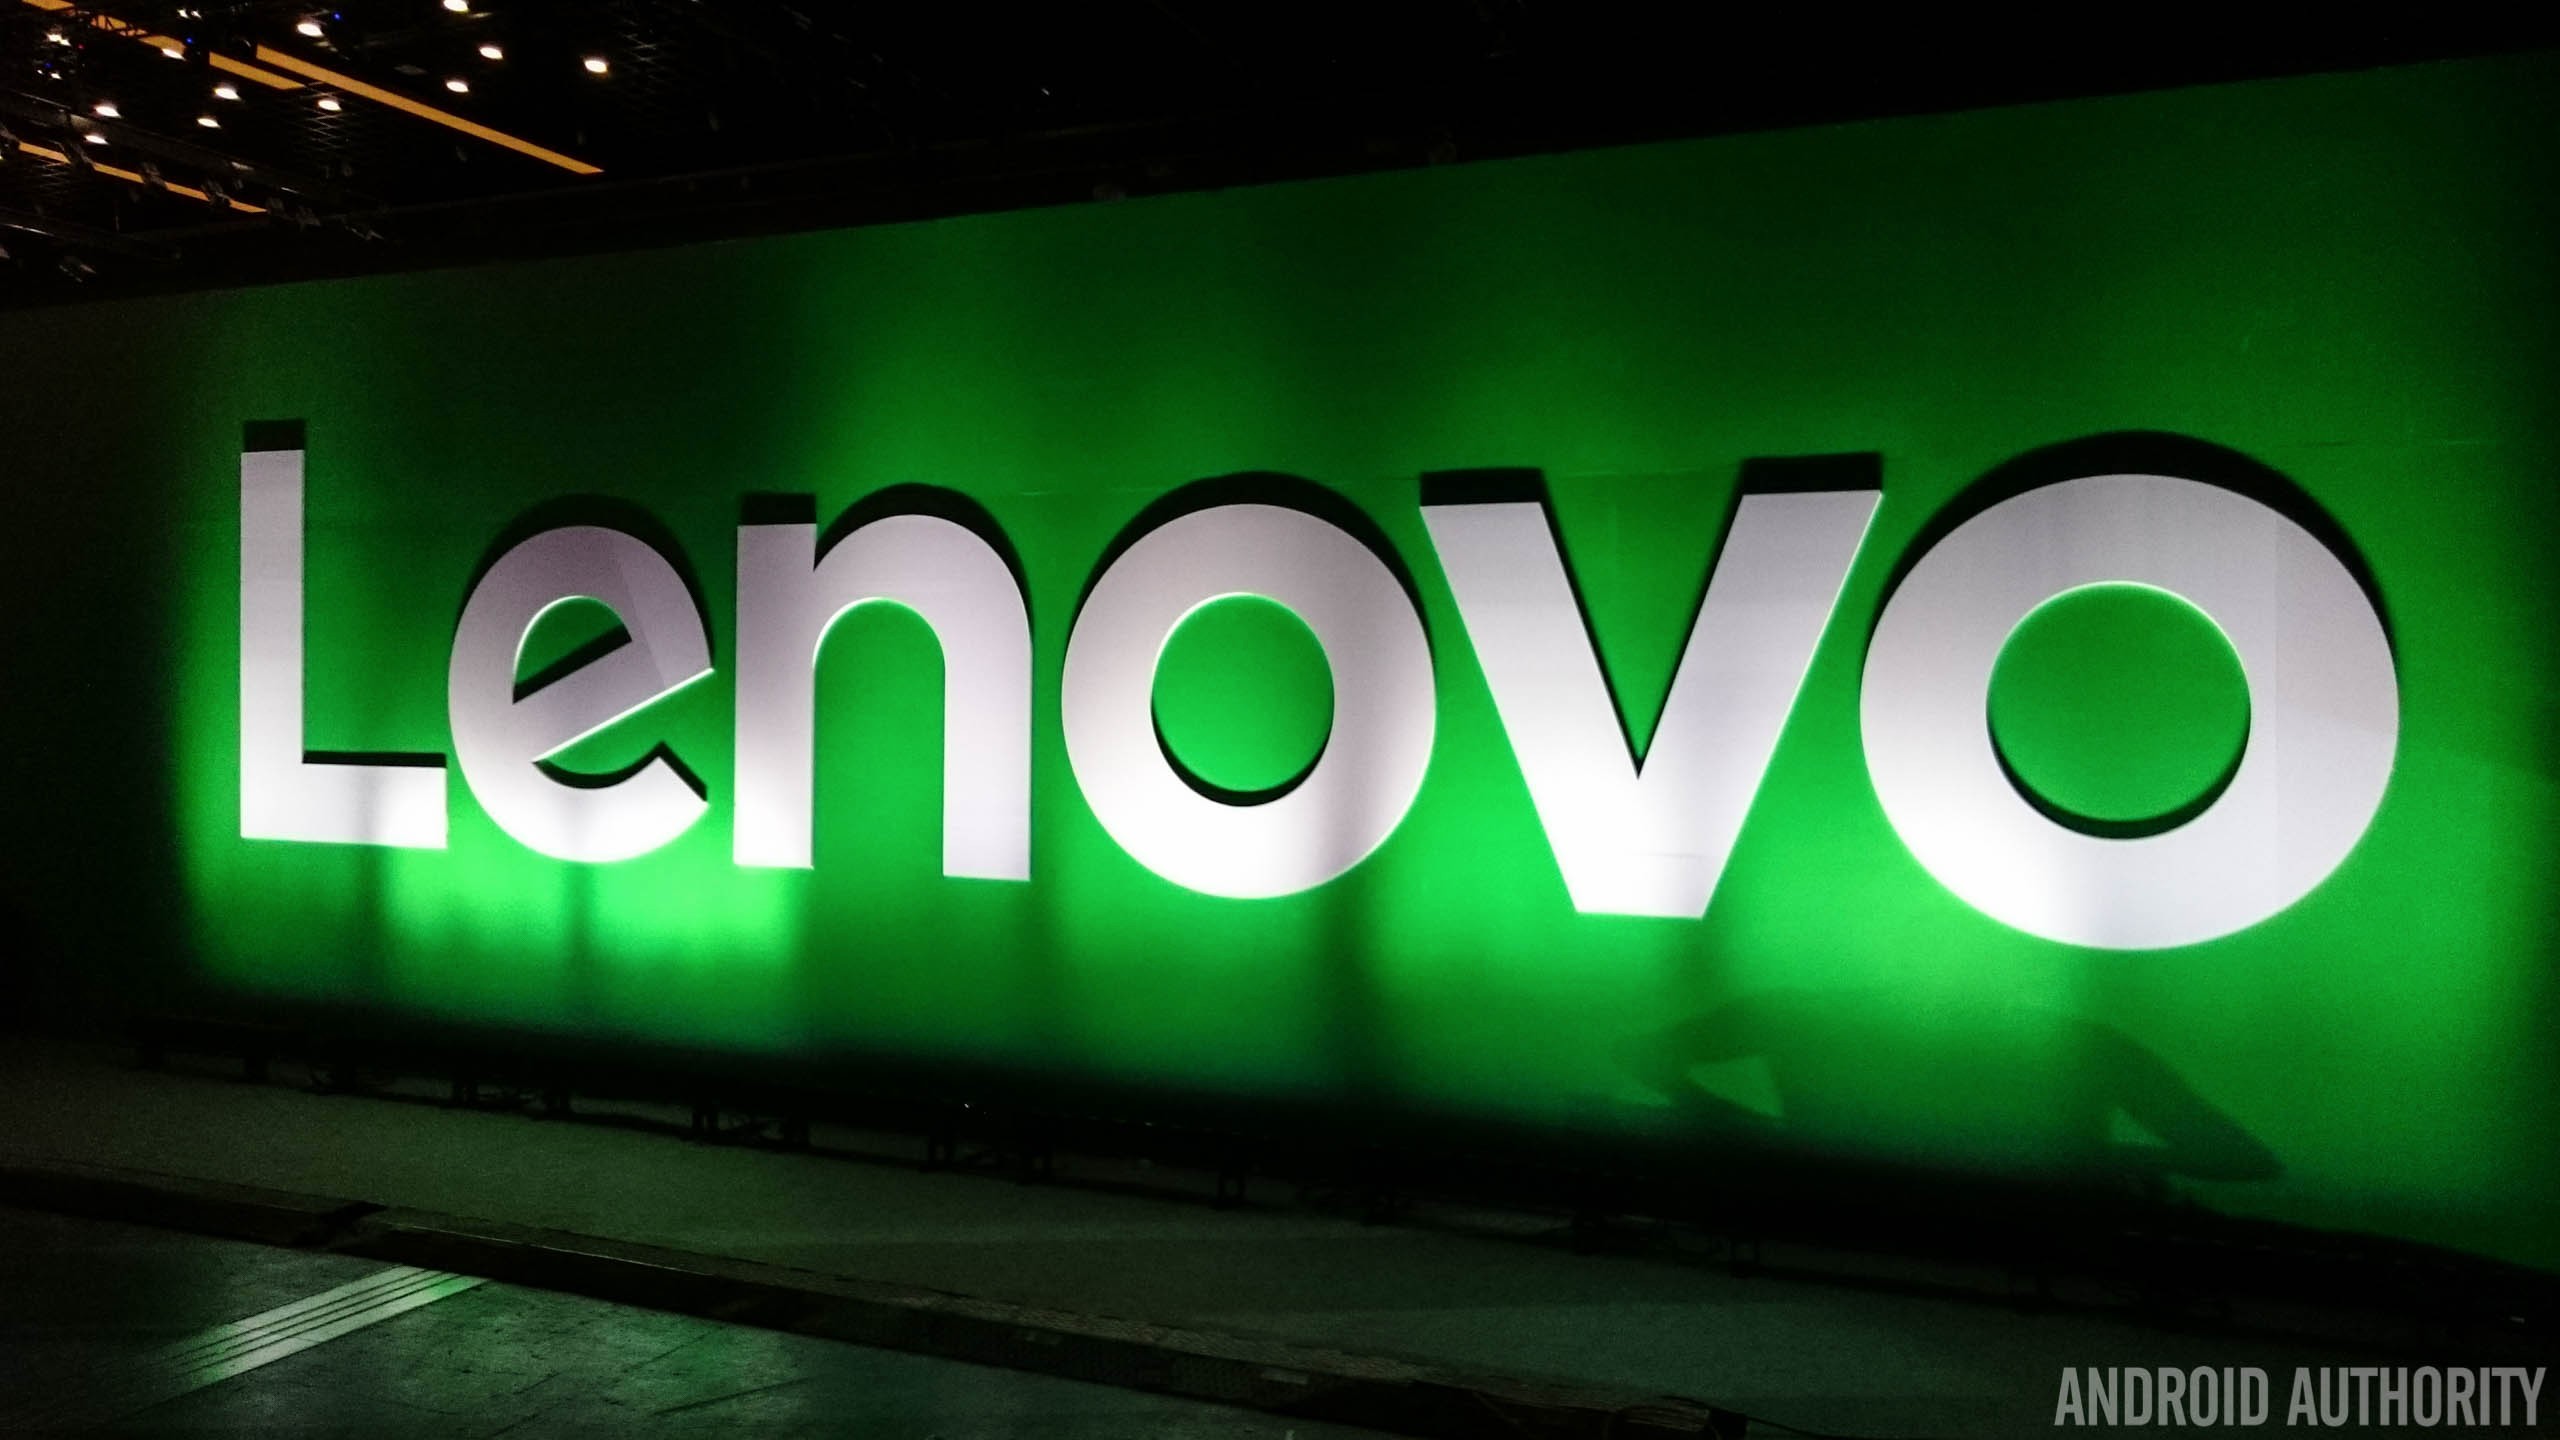 Lenovo-TechWorld-2015-highlights-aa-(12-of16)